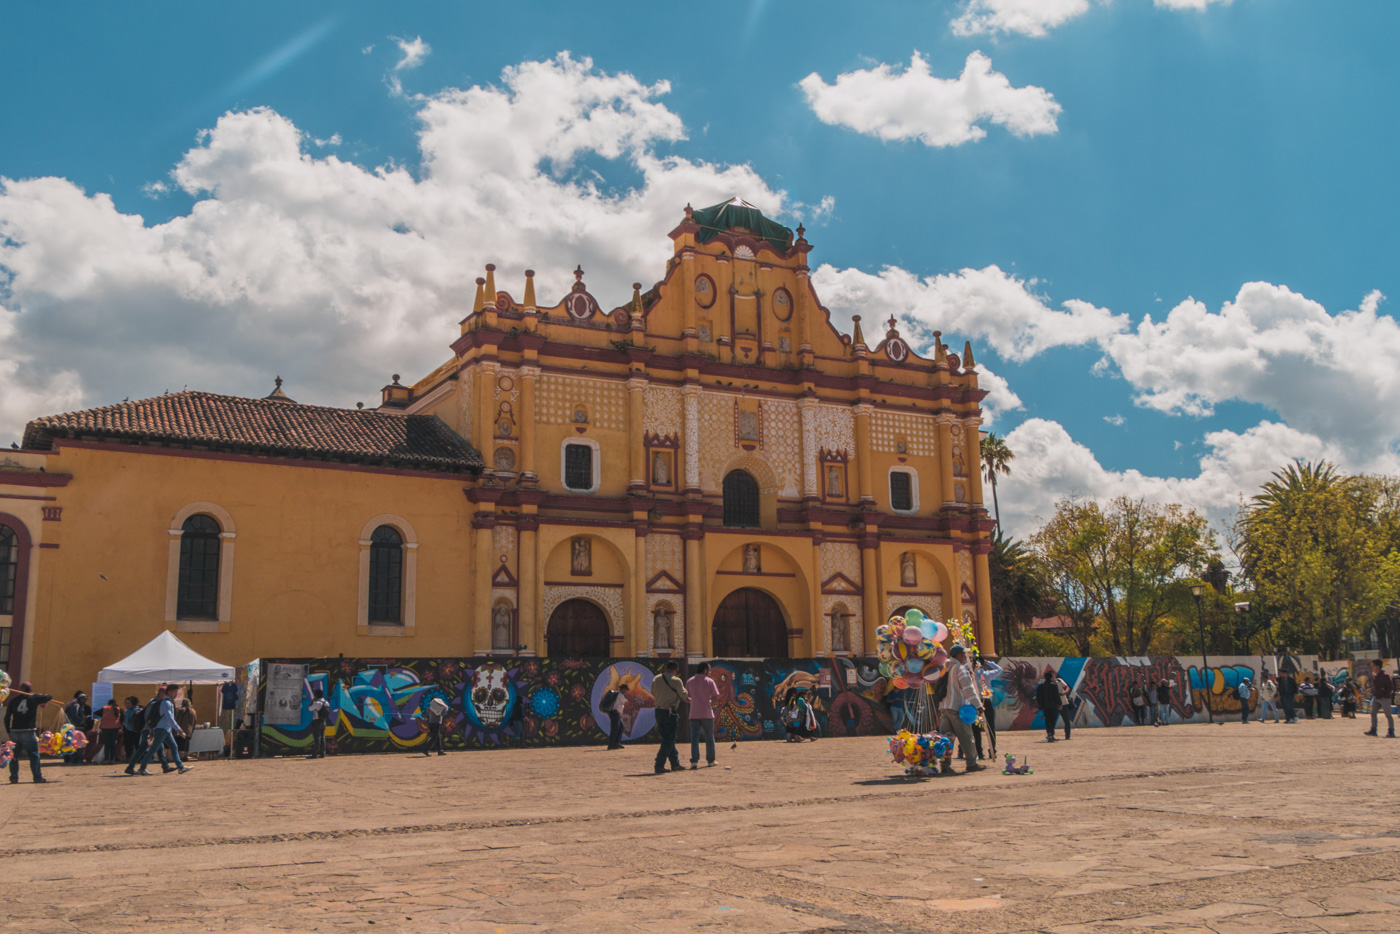 San Cristobal de las Casas – Mexiko authentisch erleben!